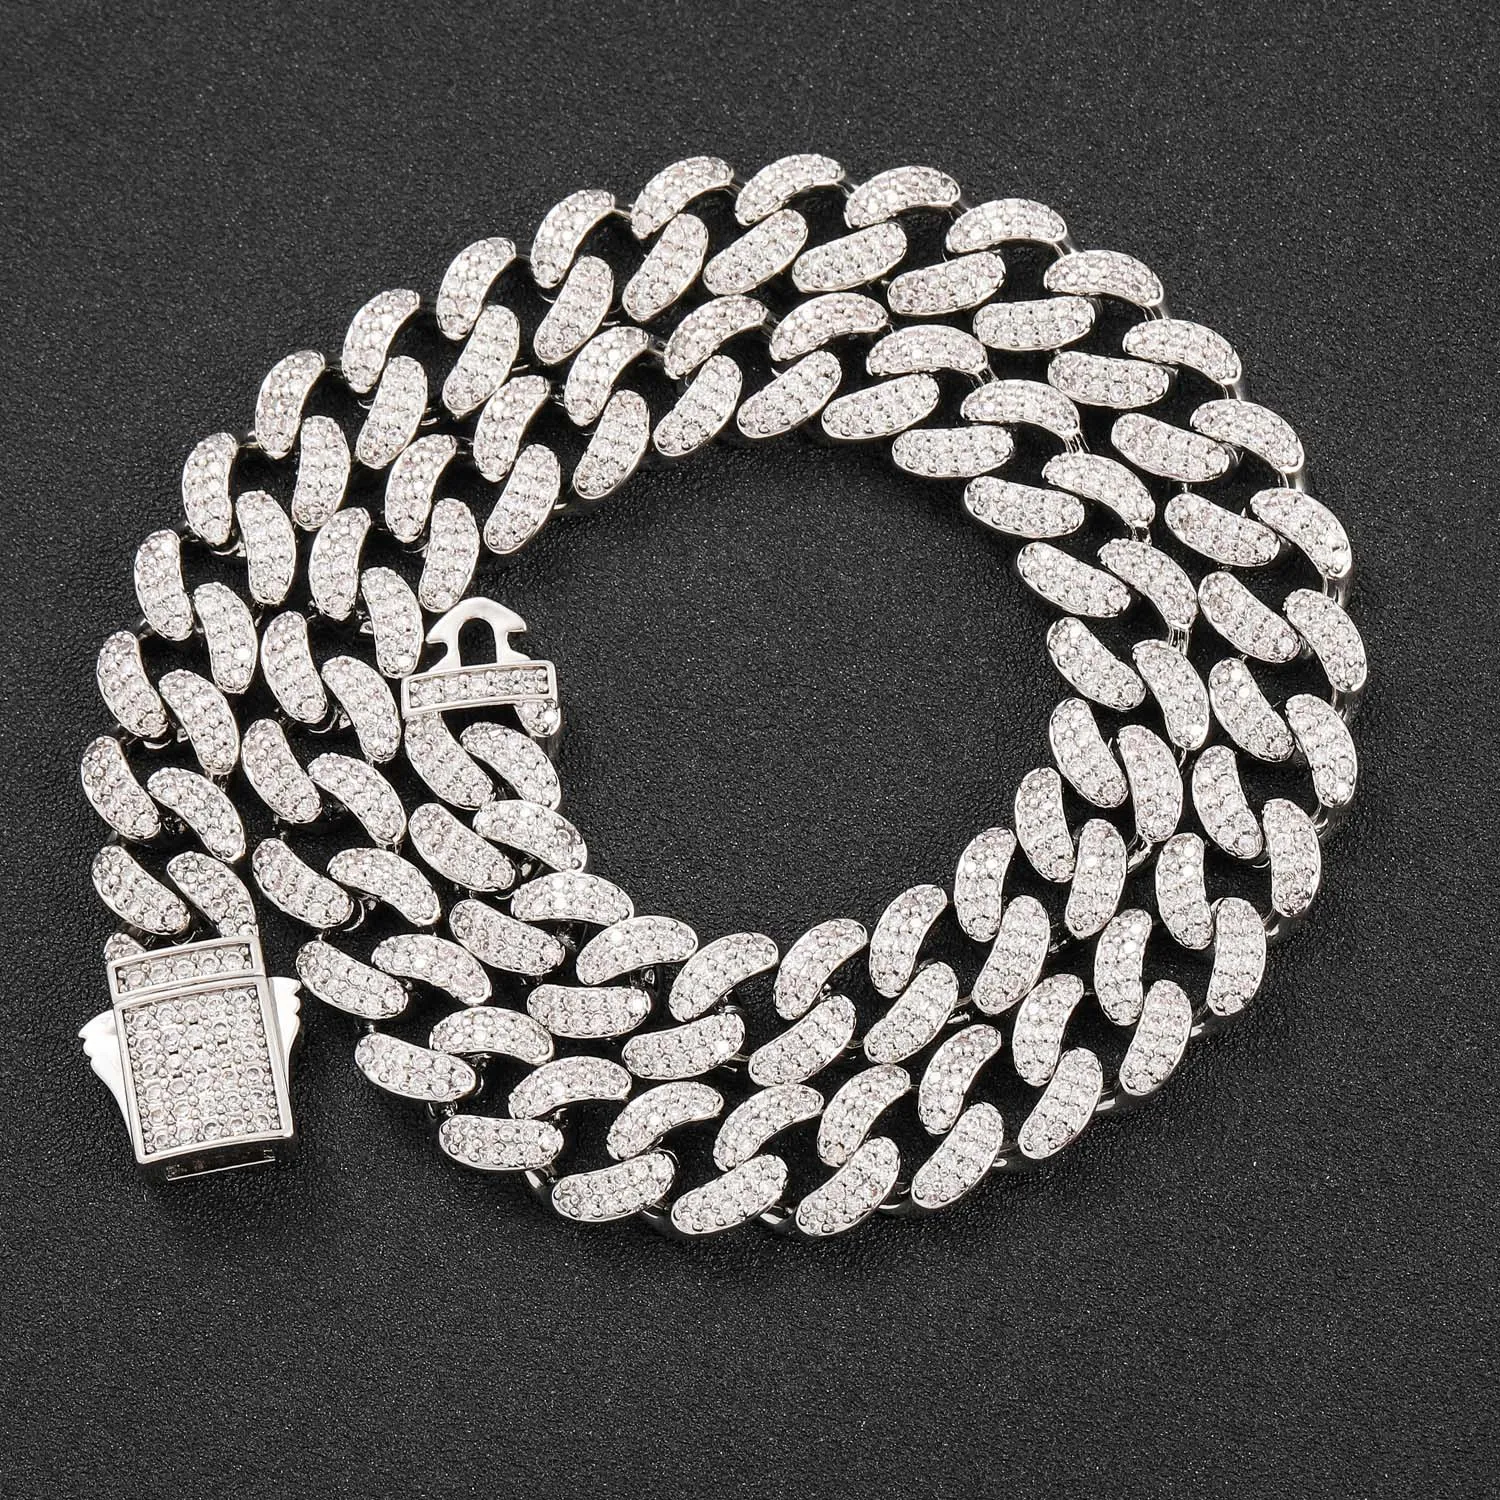 Trendy 12mm 16-24inch Pure 925 Sterling Silver Bling Moissanite Diamond Cuban Chain Necklace Bracelet For Women/Men Nice Gift